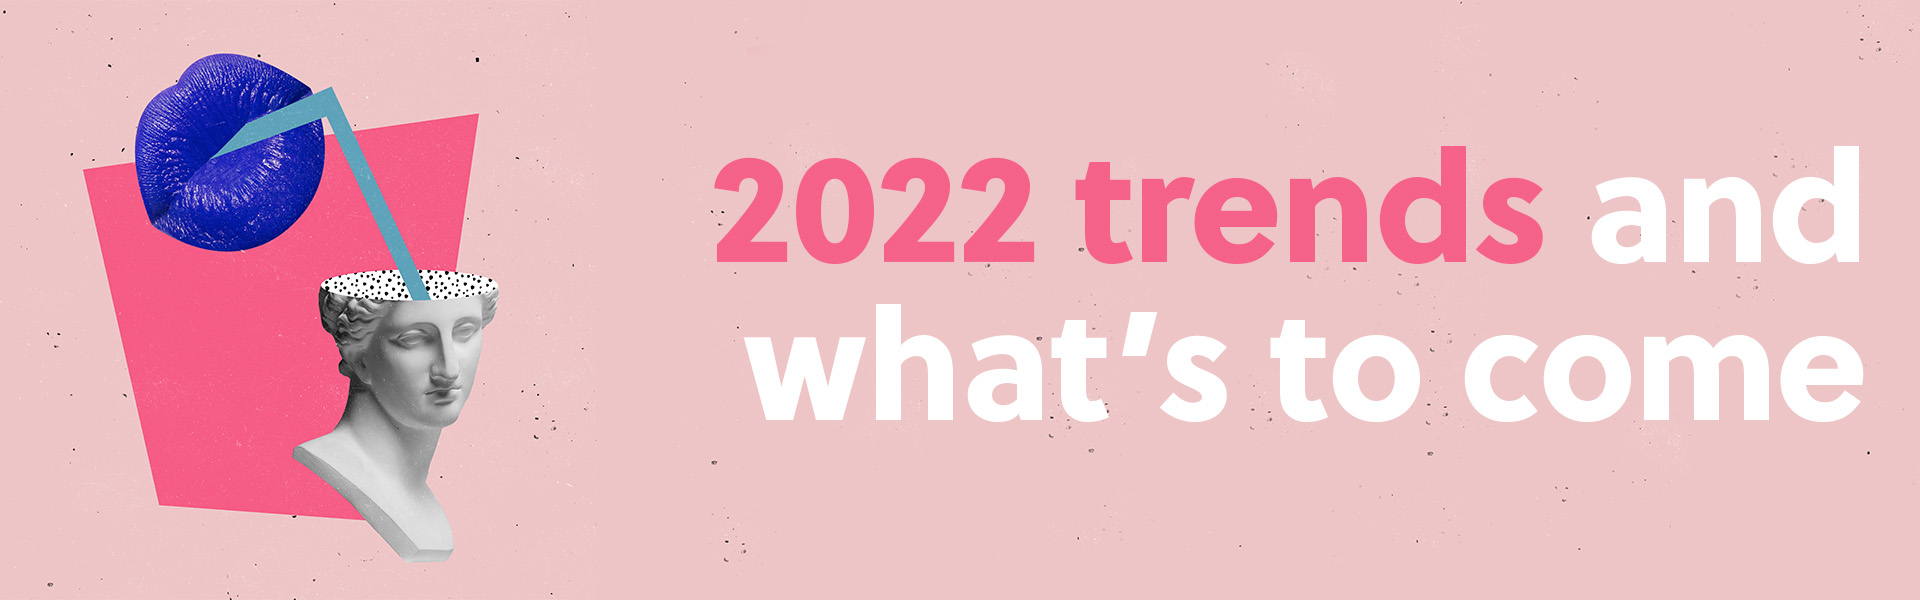 what social media trends happened in 2022